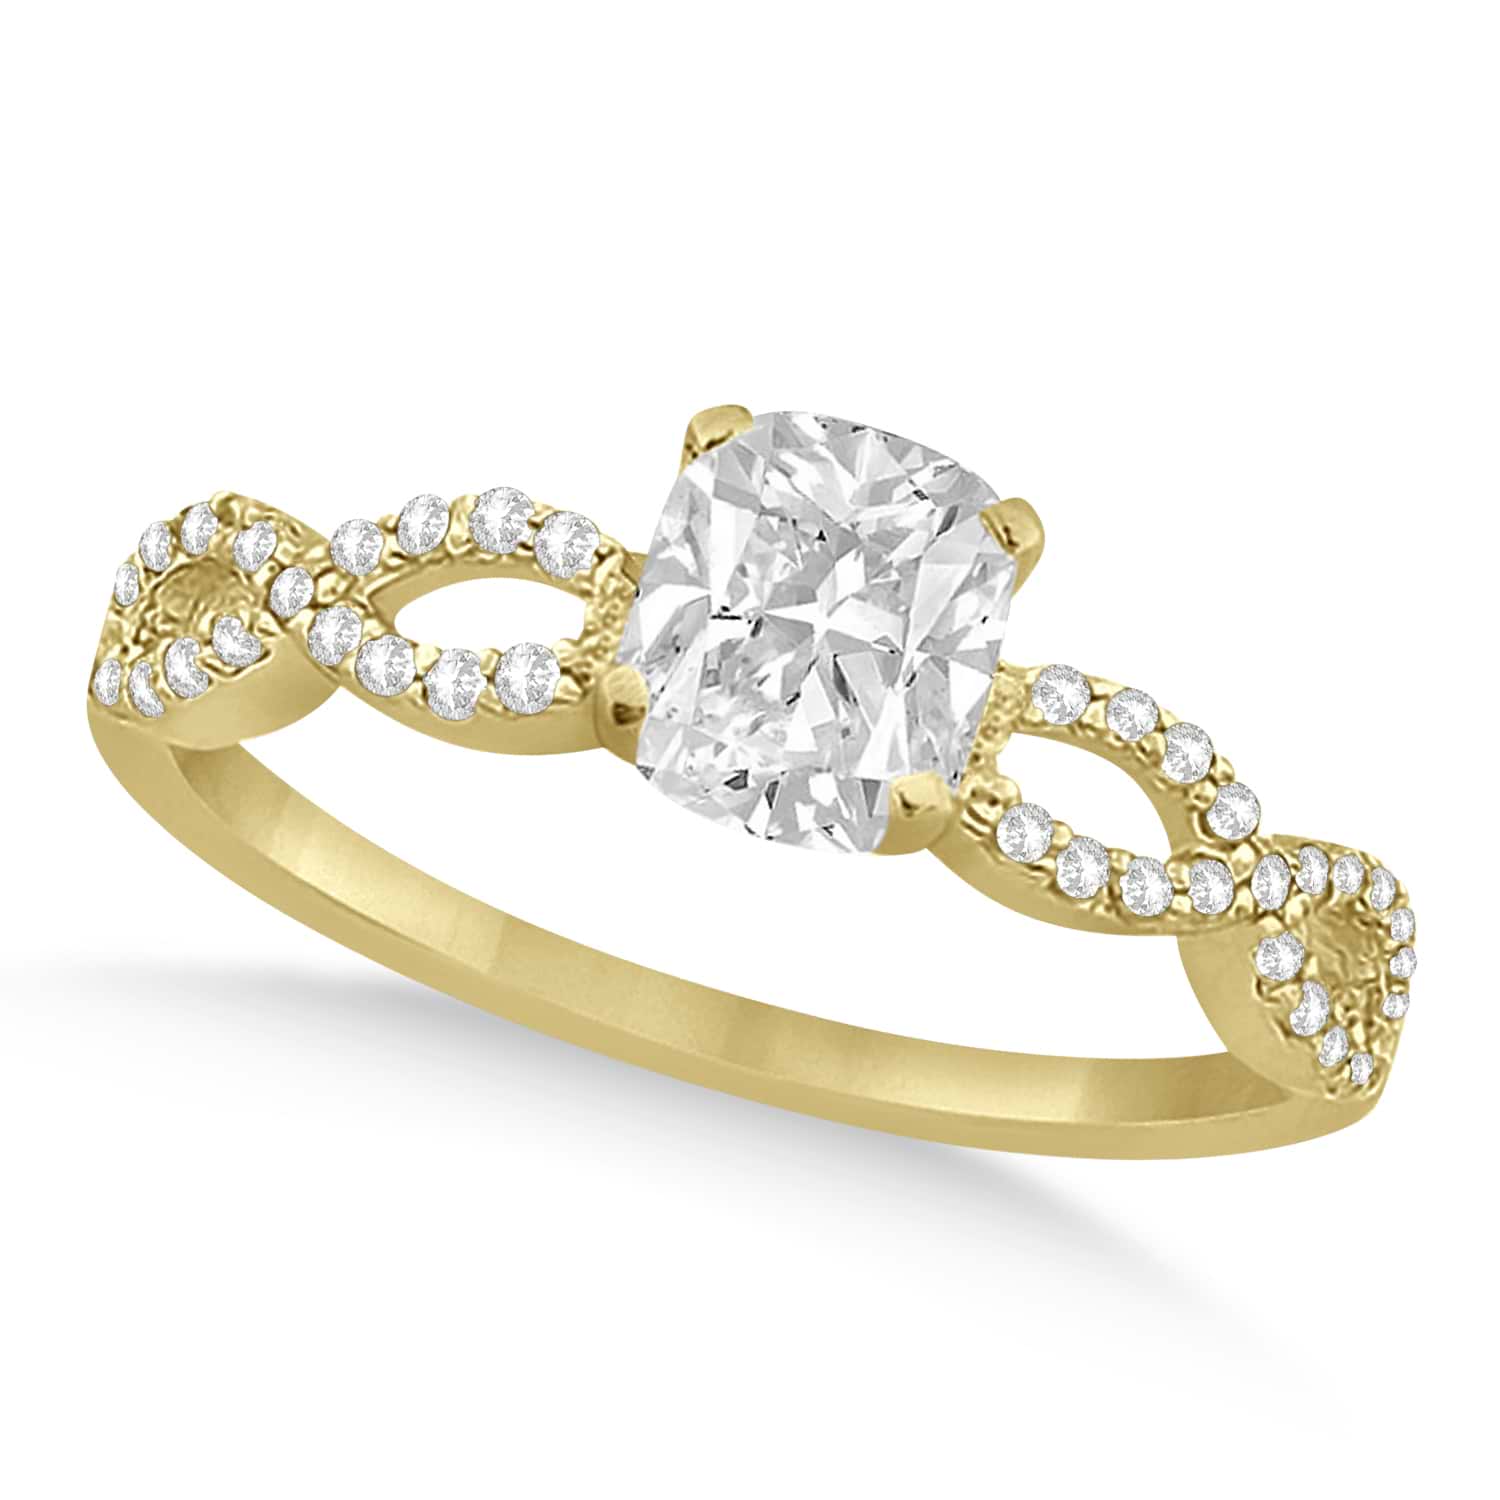 Infinity Cushion-Cut Diamond Engagement Ring 18k Yellow Gold (1.00ct)